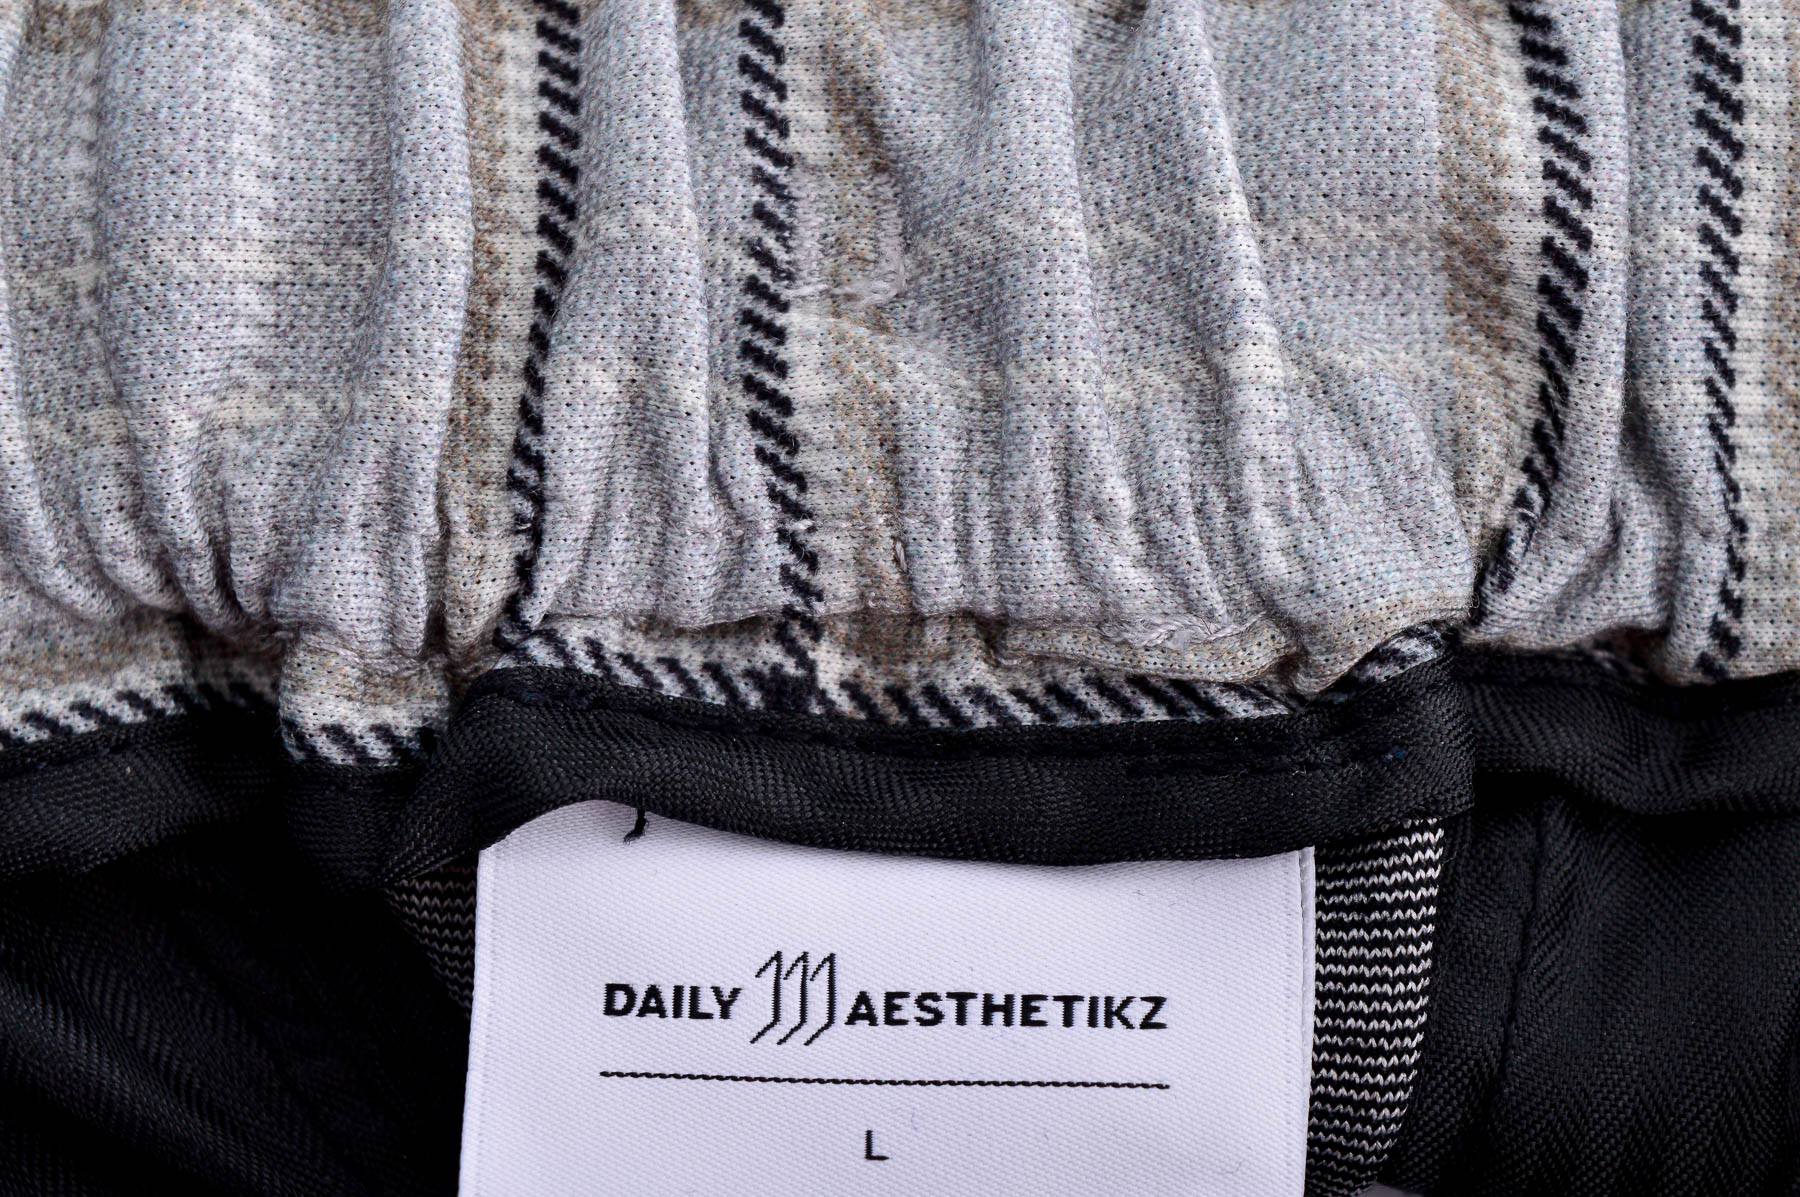 Men's shorts - Daily Aesthetikz - 2